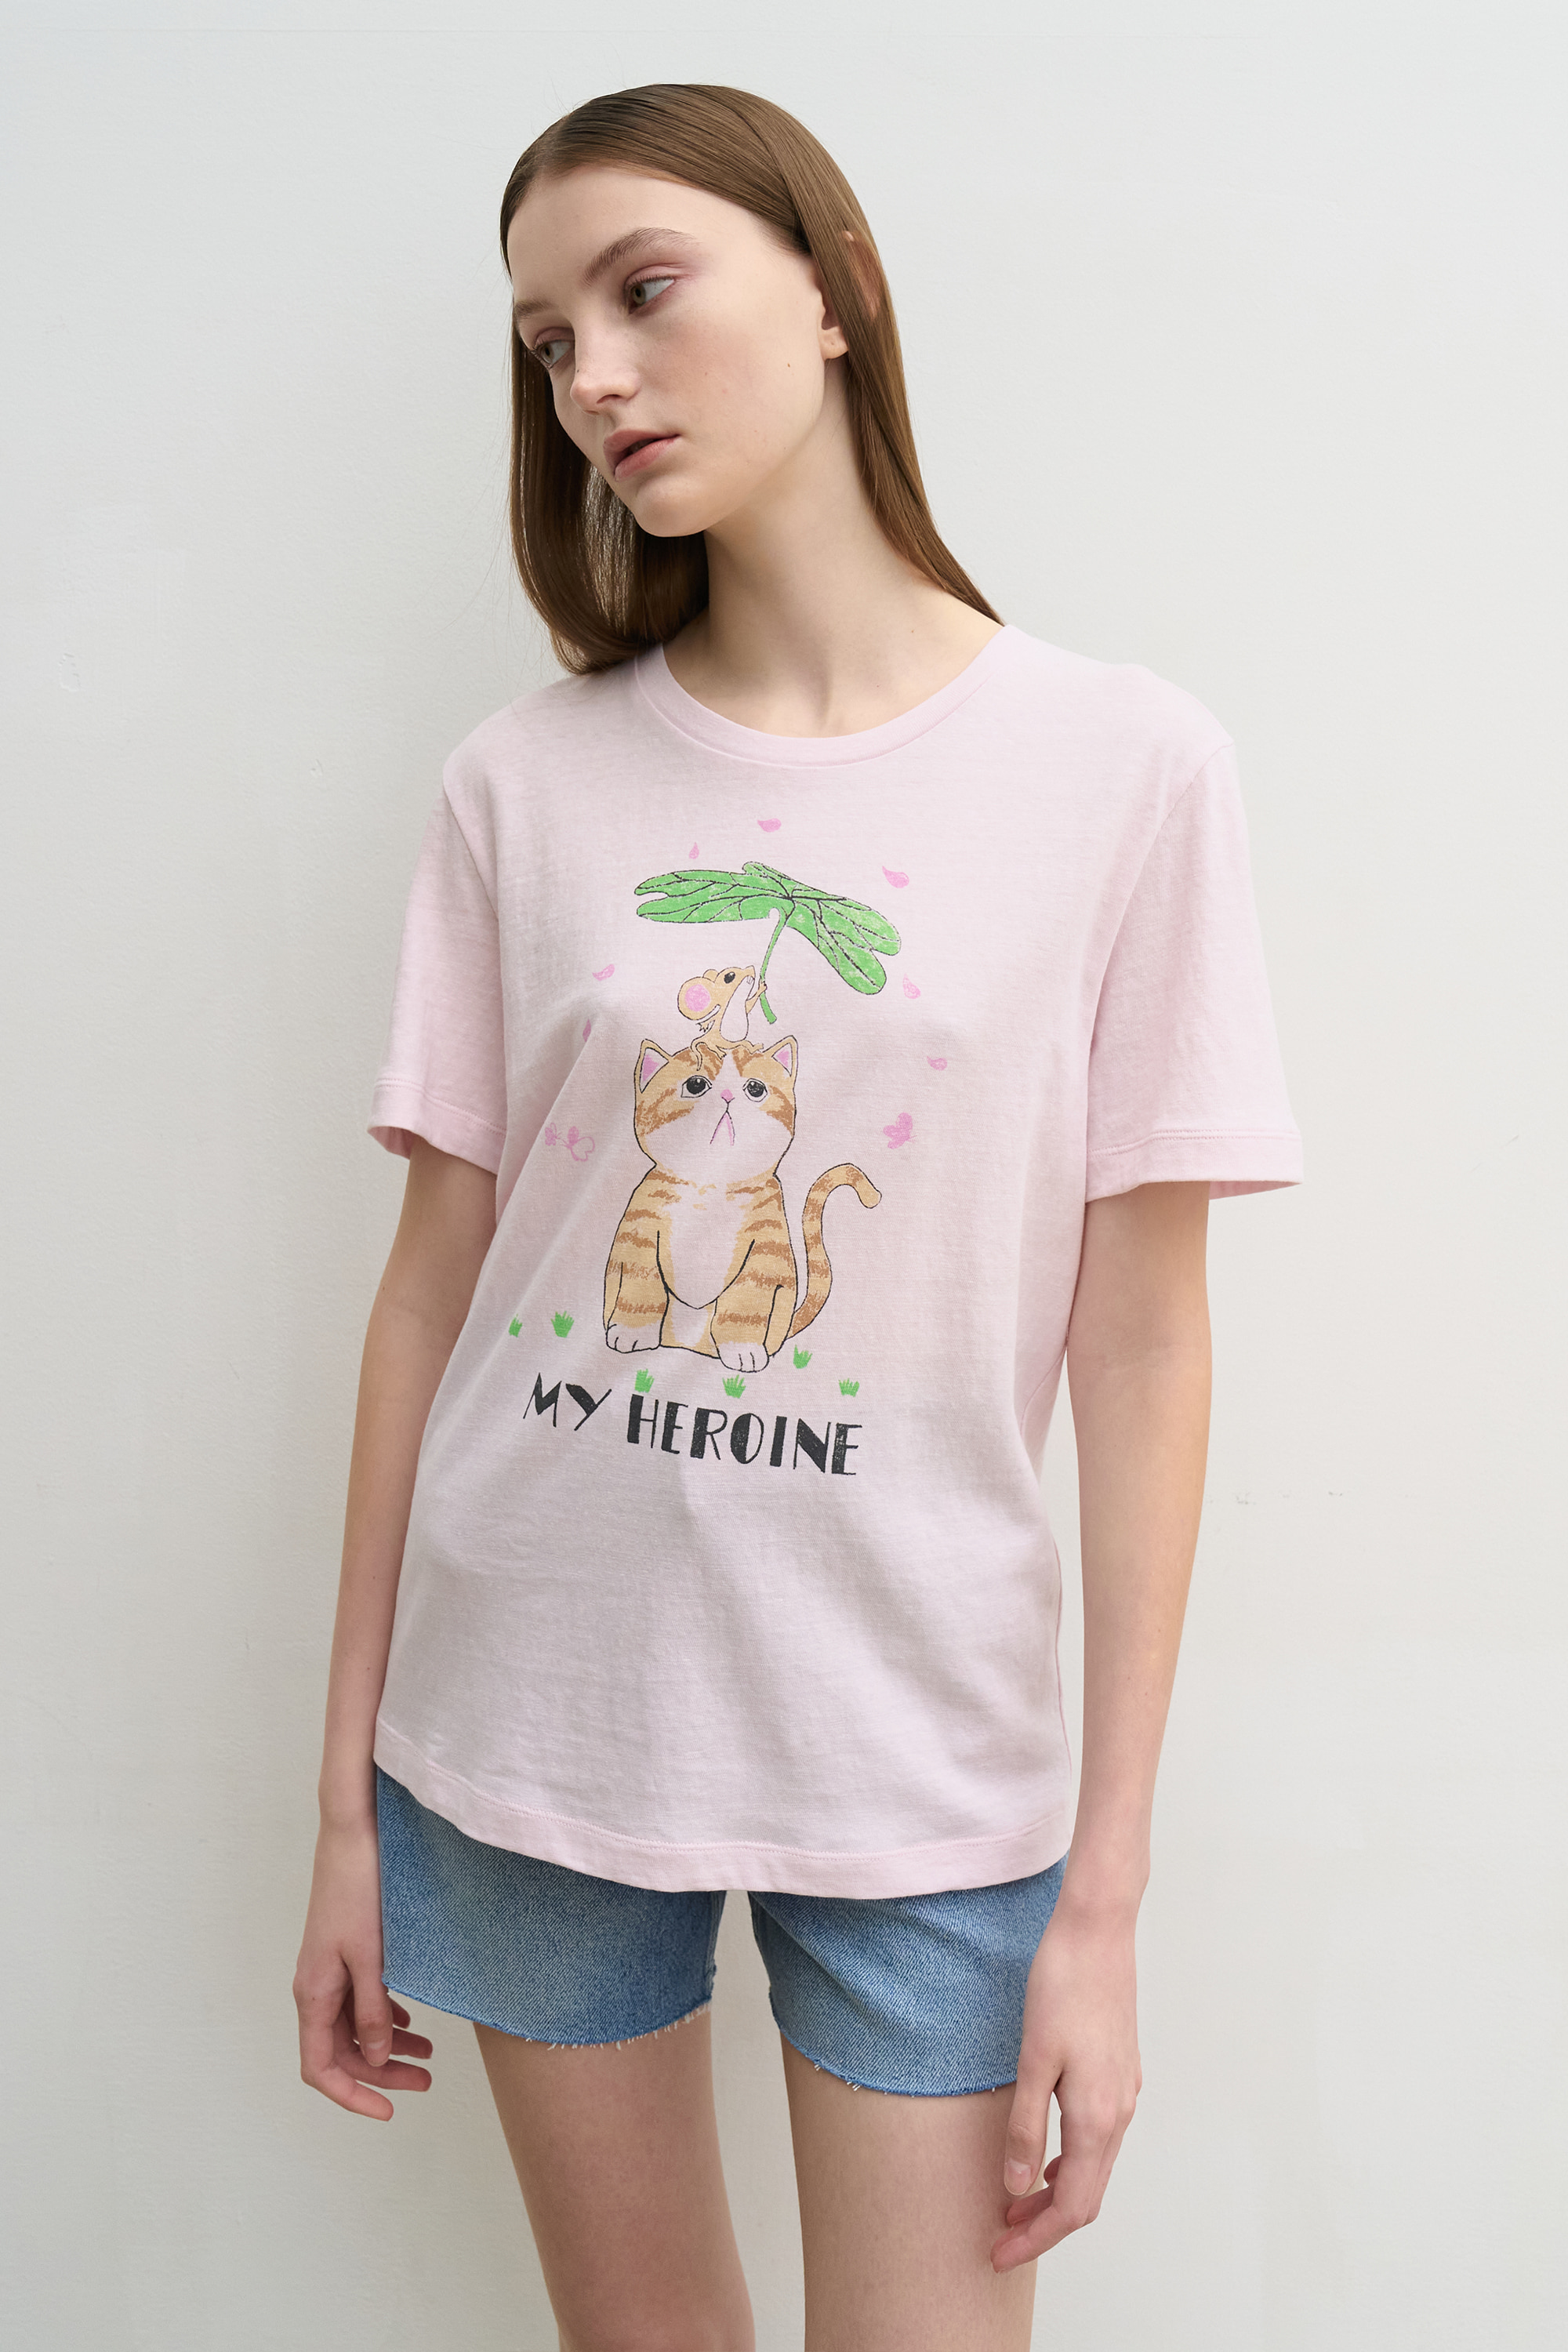 MY HEROINE t-shirts (pink)